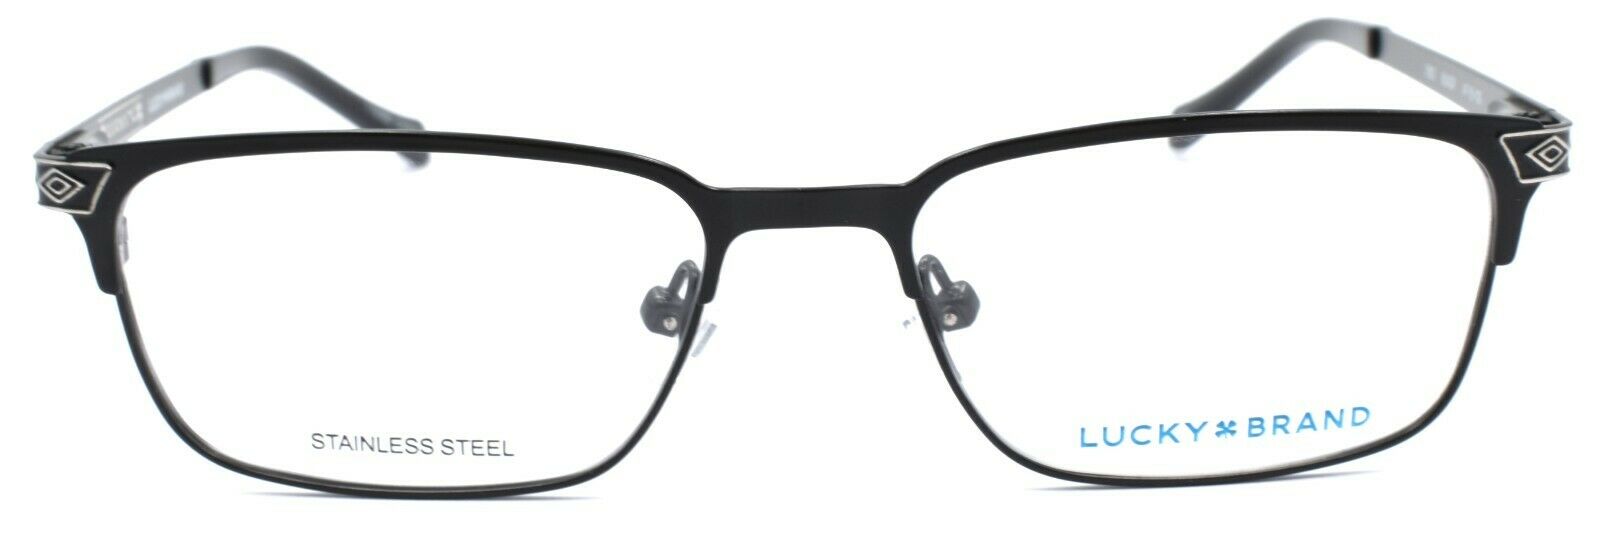 2-LUCKY BRAND D802 Kids Unisex Eyeglasses Frames Small 47-15-130 Black + CASE-751286282467-IKSpecs